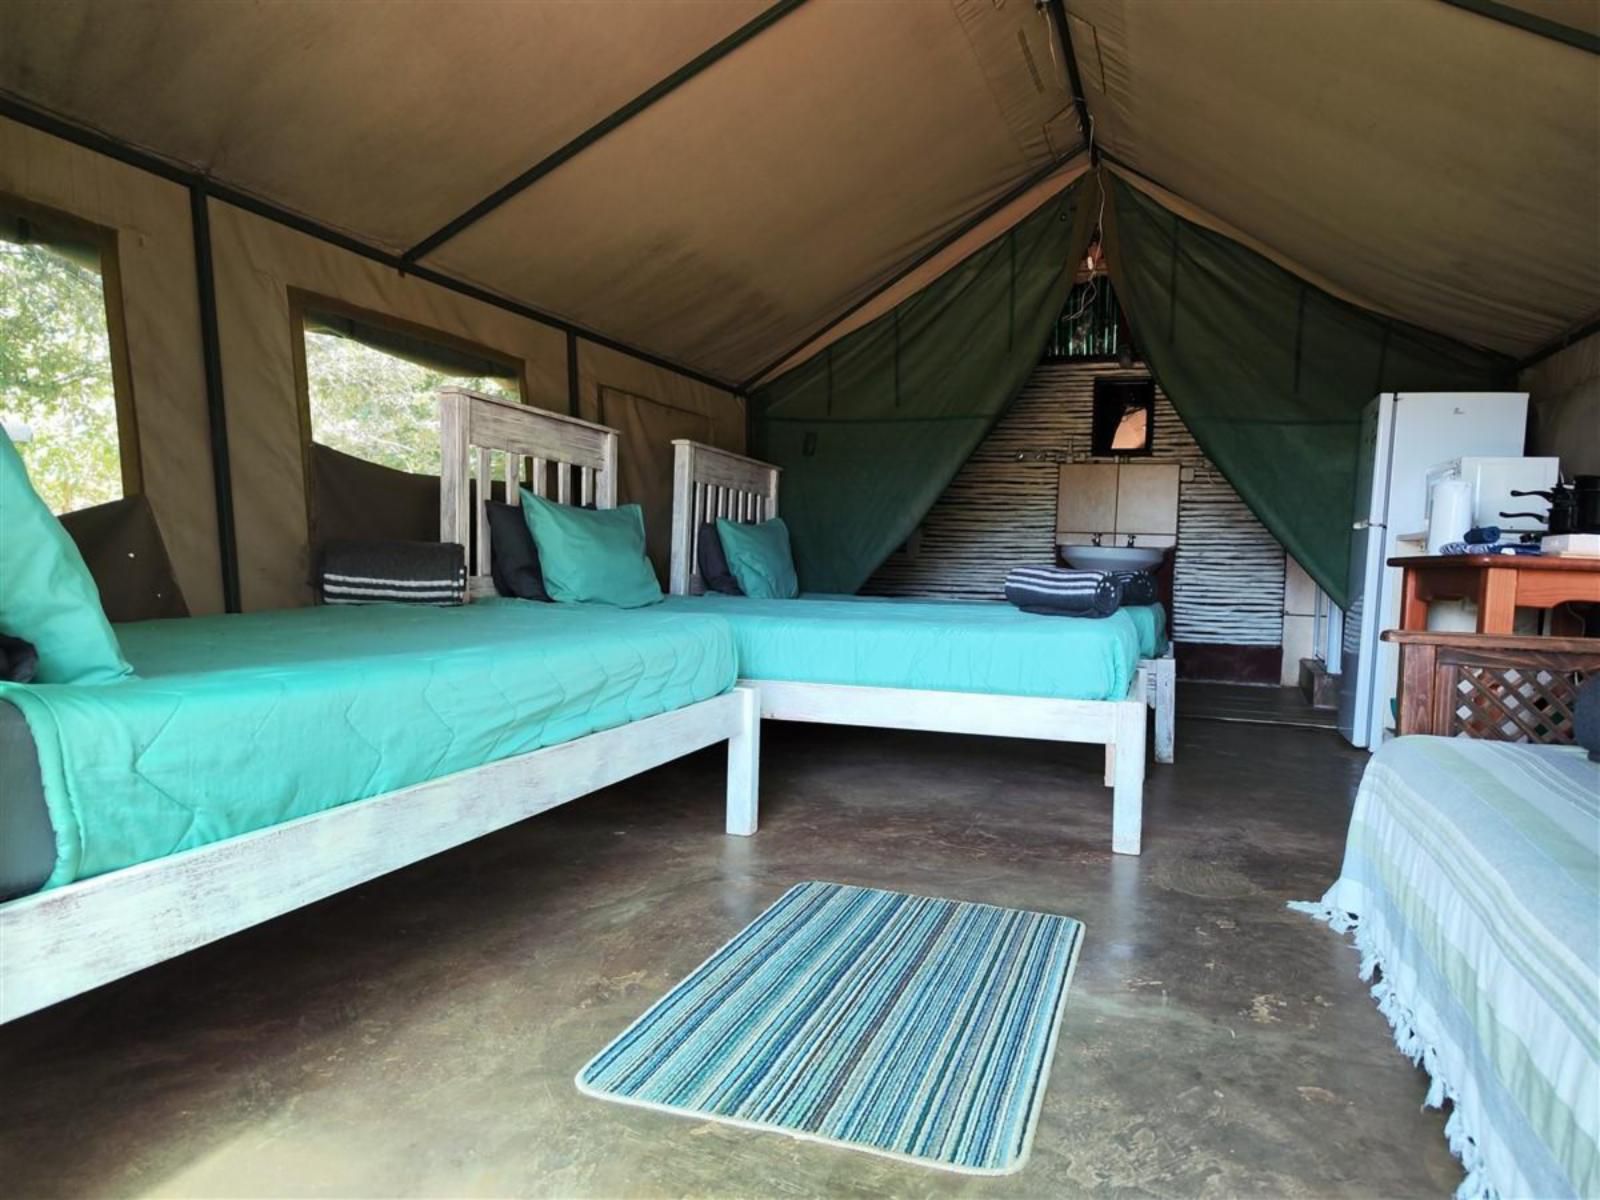 Mac Mac Forest Retreat Graskop Mpumalanga South Africa Tent, Architecture, Bedroom